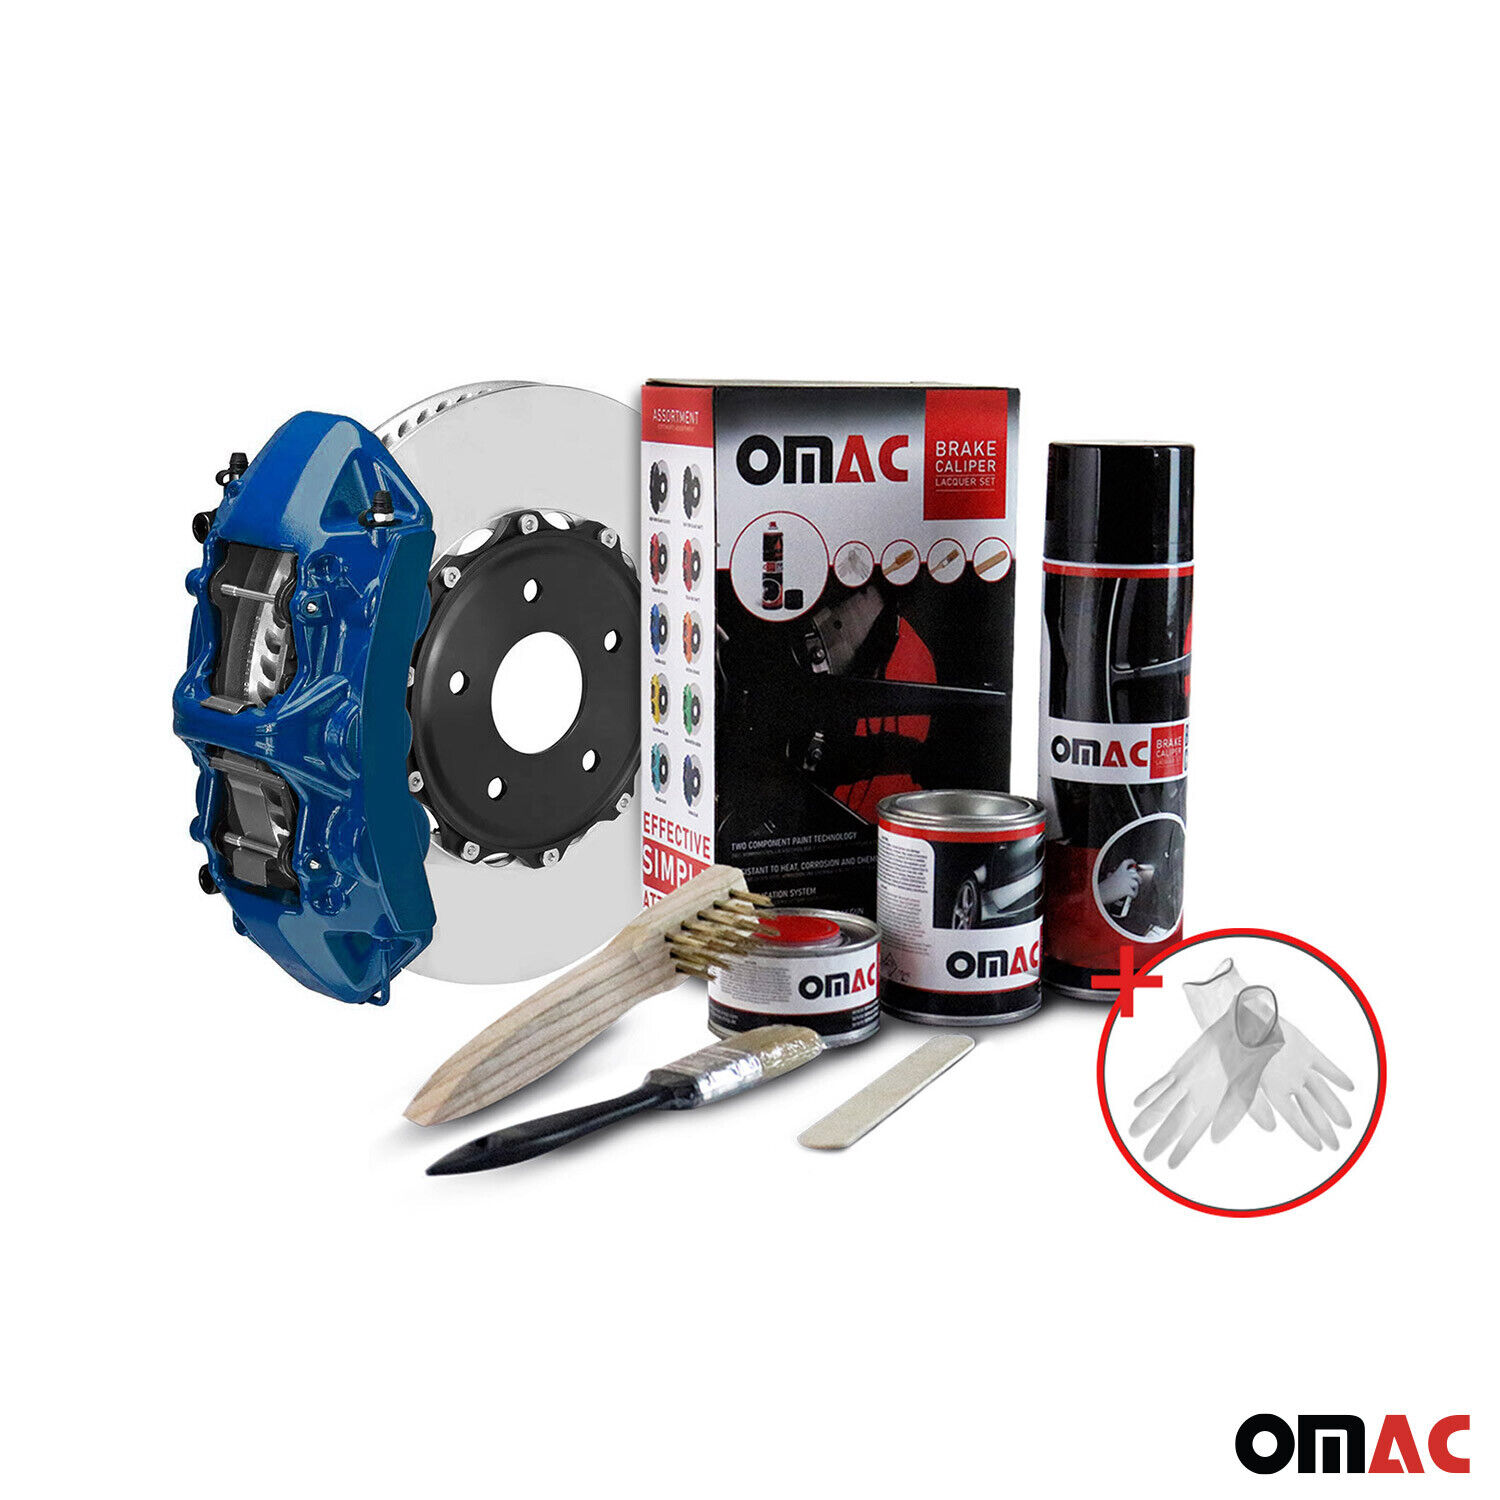 OMAC Brake Caliper Paint Epoxy Based Car Kit Hawaii Blue Glossy High-Temperature